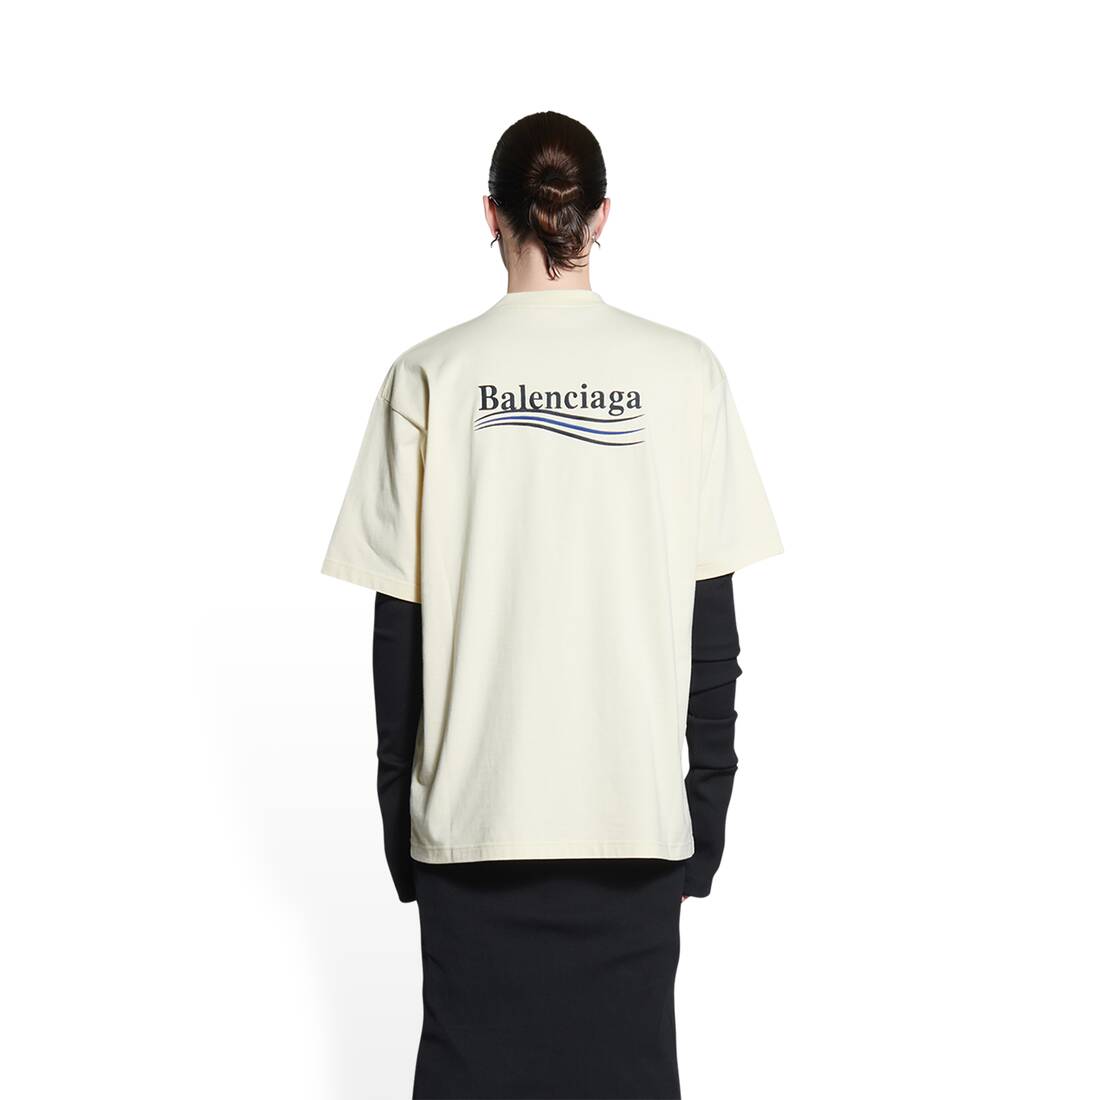 Balenciaga Men's Oversized Political Campaign Logo T-Shirt in Black/White, Size Medium | END. Clothing